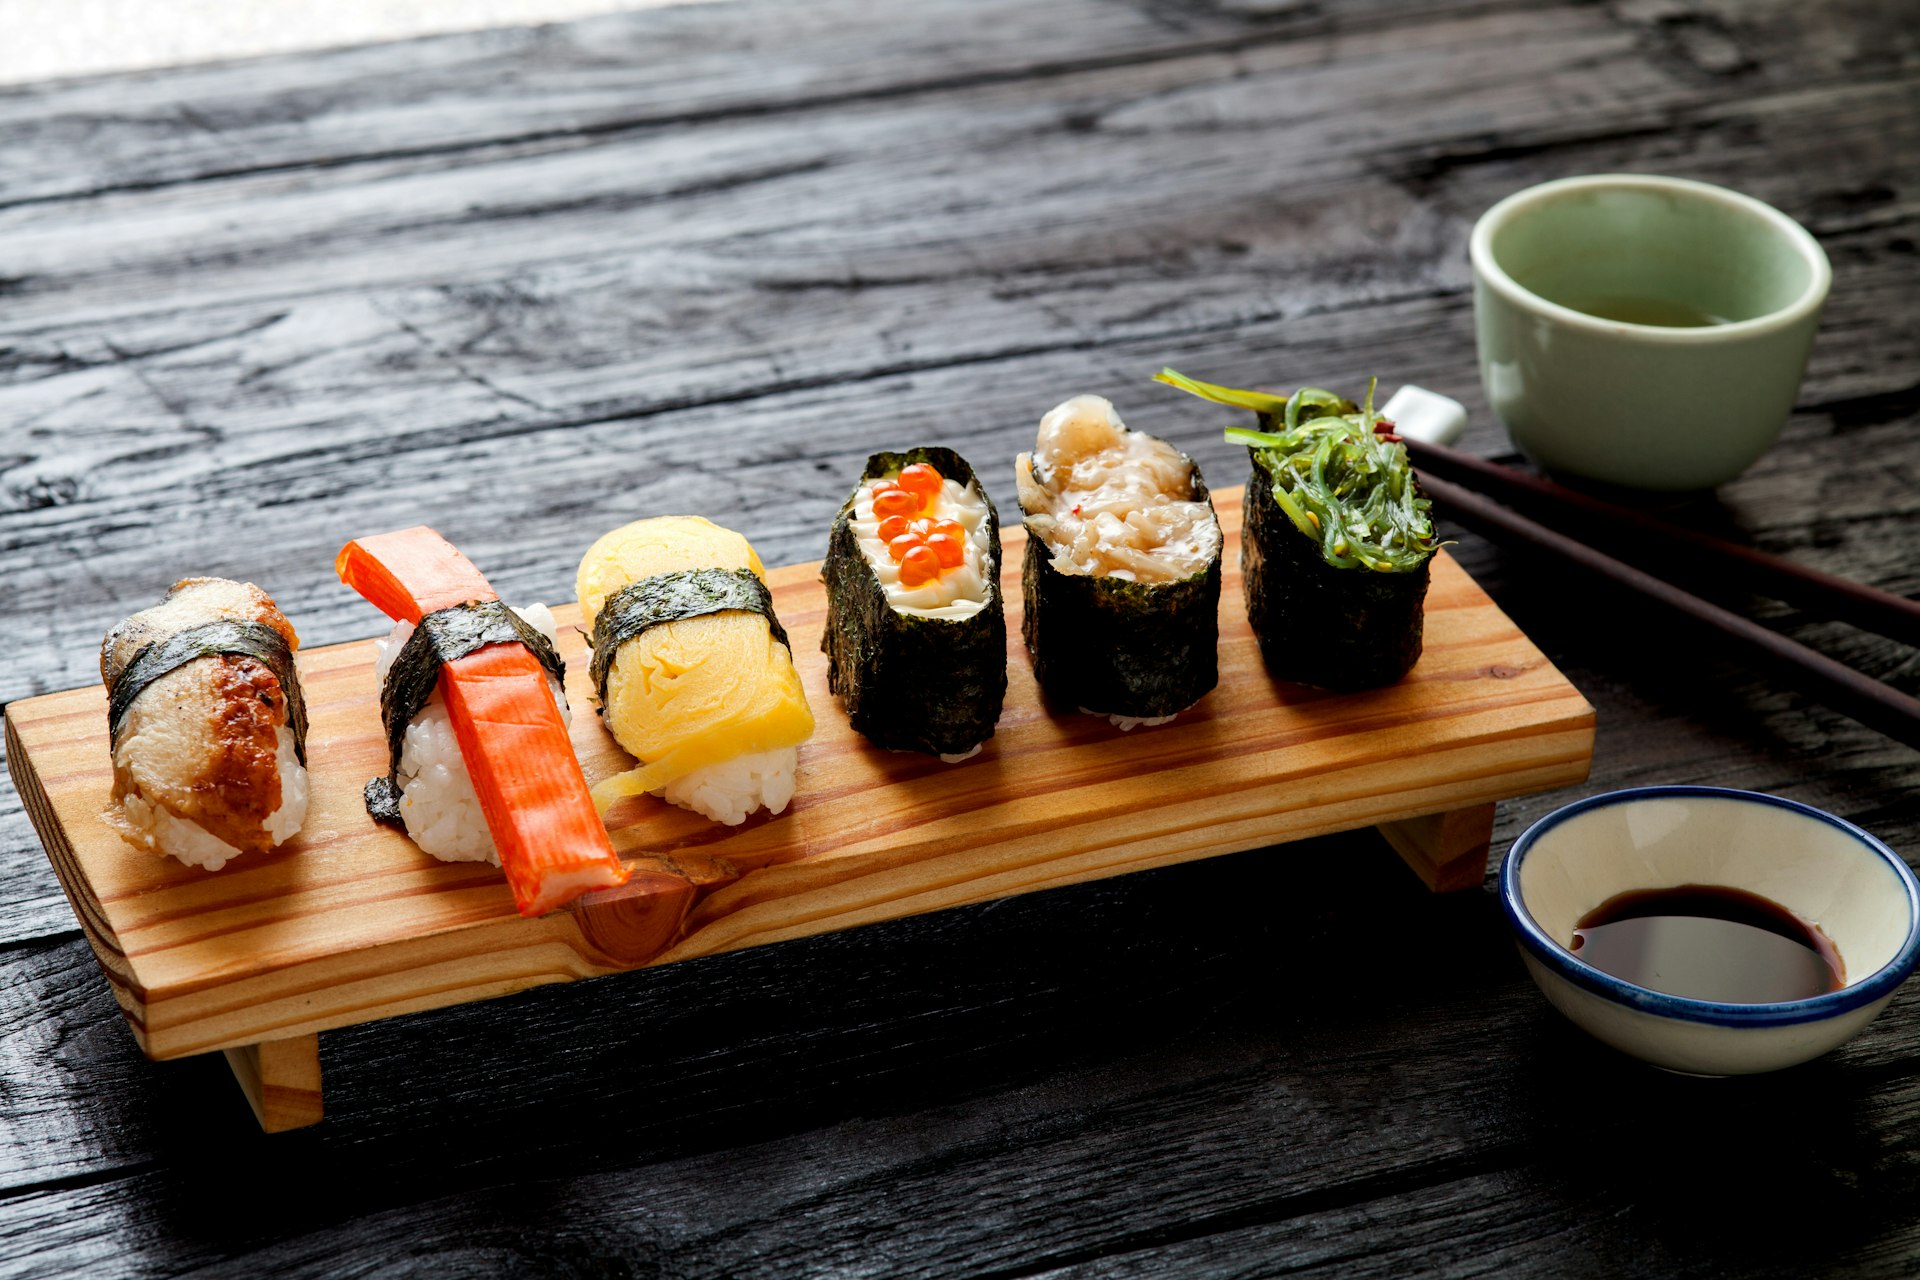 Sushi Set served on dark wooden table